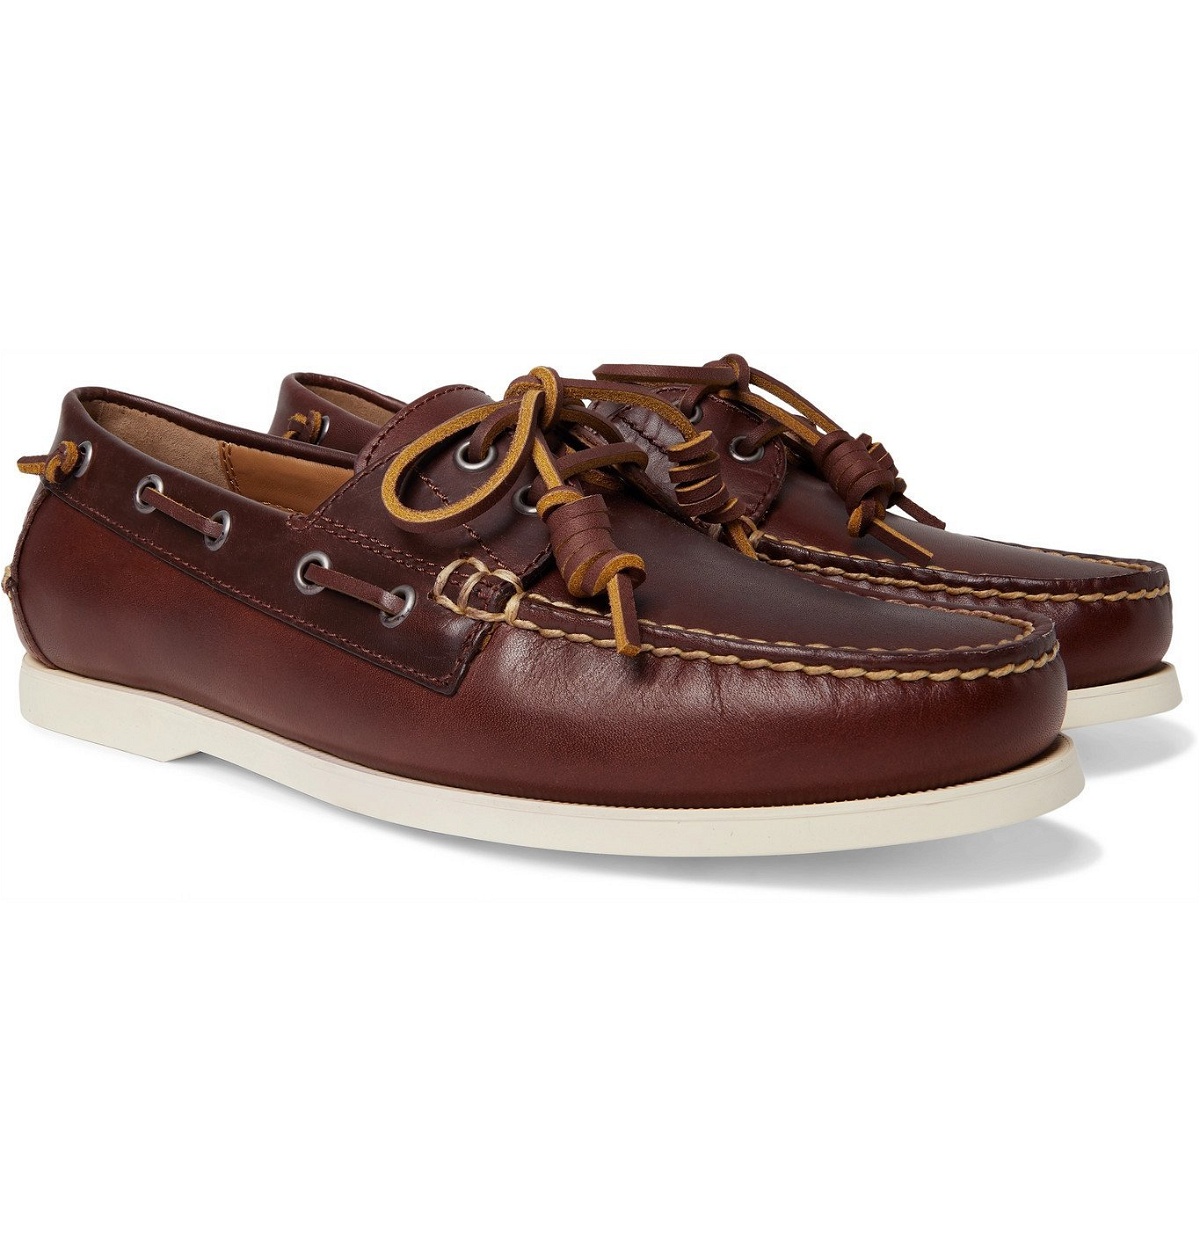 POLO RALPH LAUREN Merton Leather Boat Shoes for Men | Boat shoes, Leather boat  shoes, Boat shoes mens